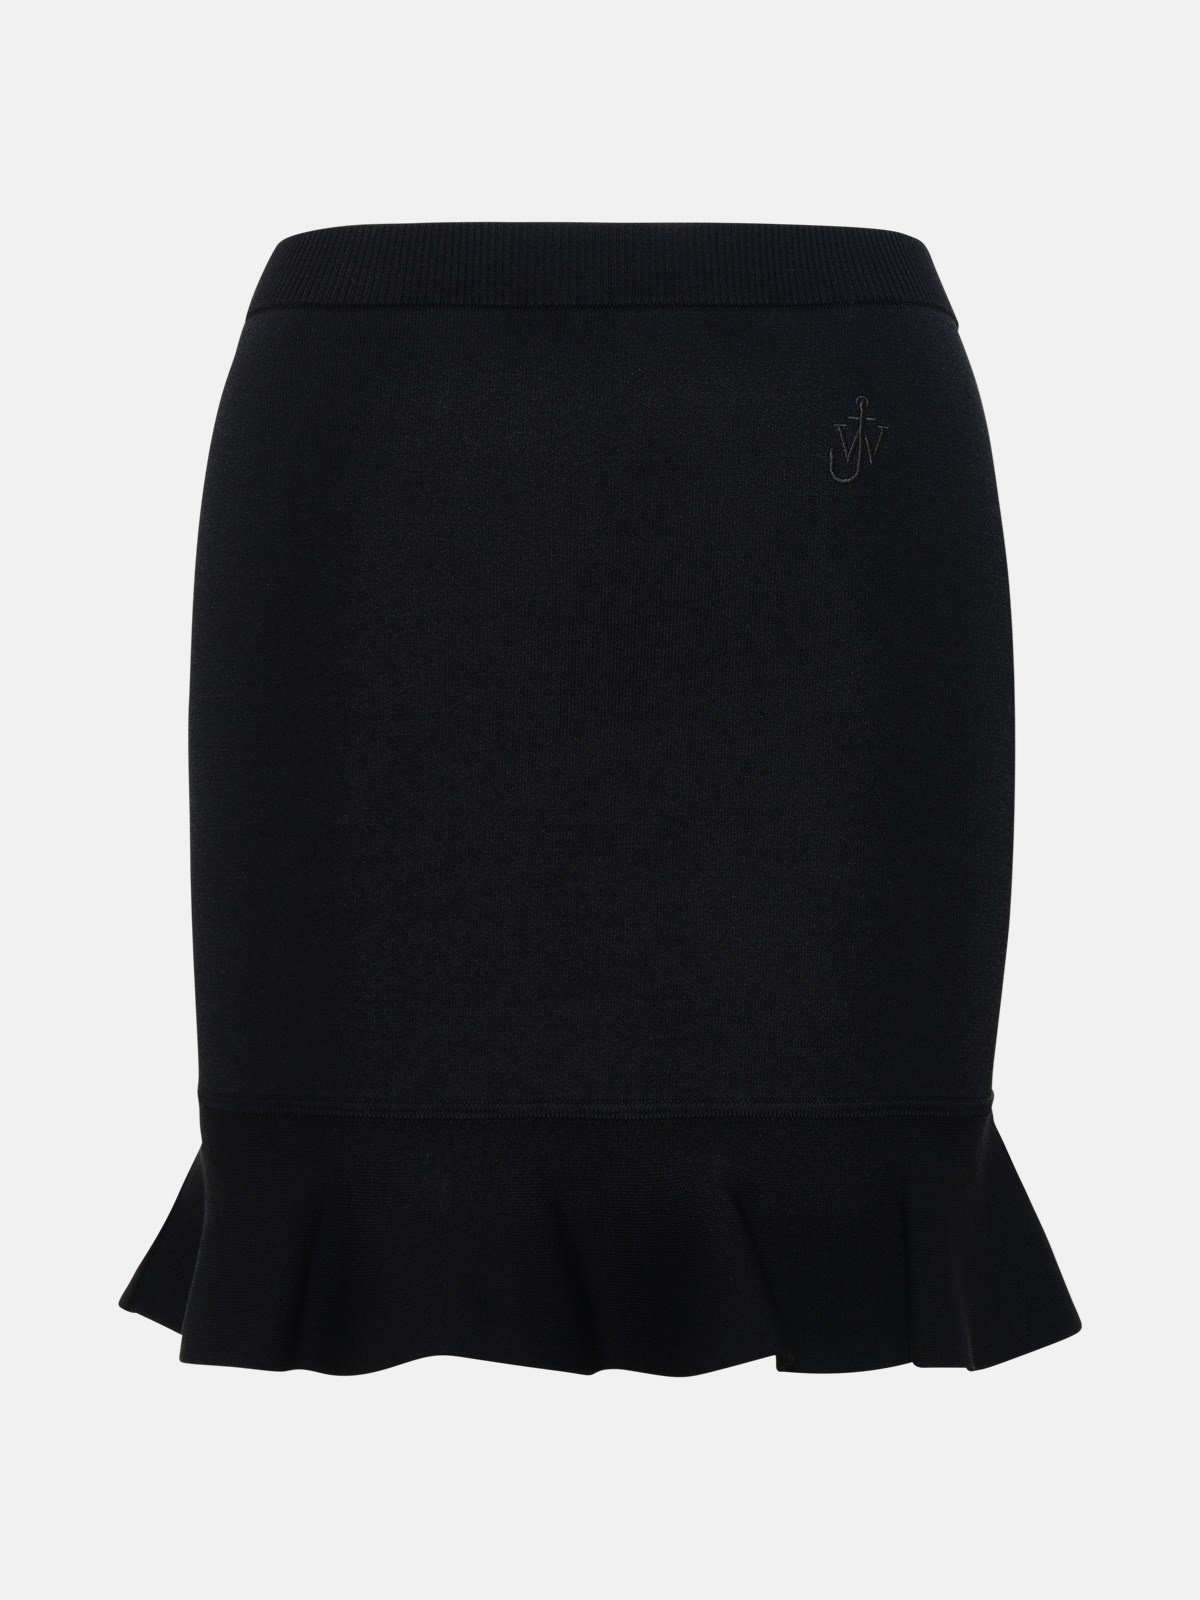 Black viscose blend skirt - 1